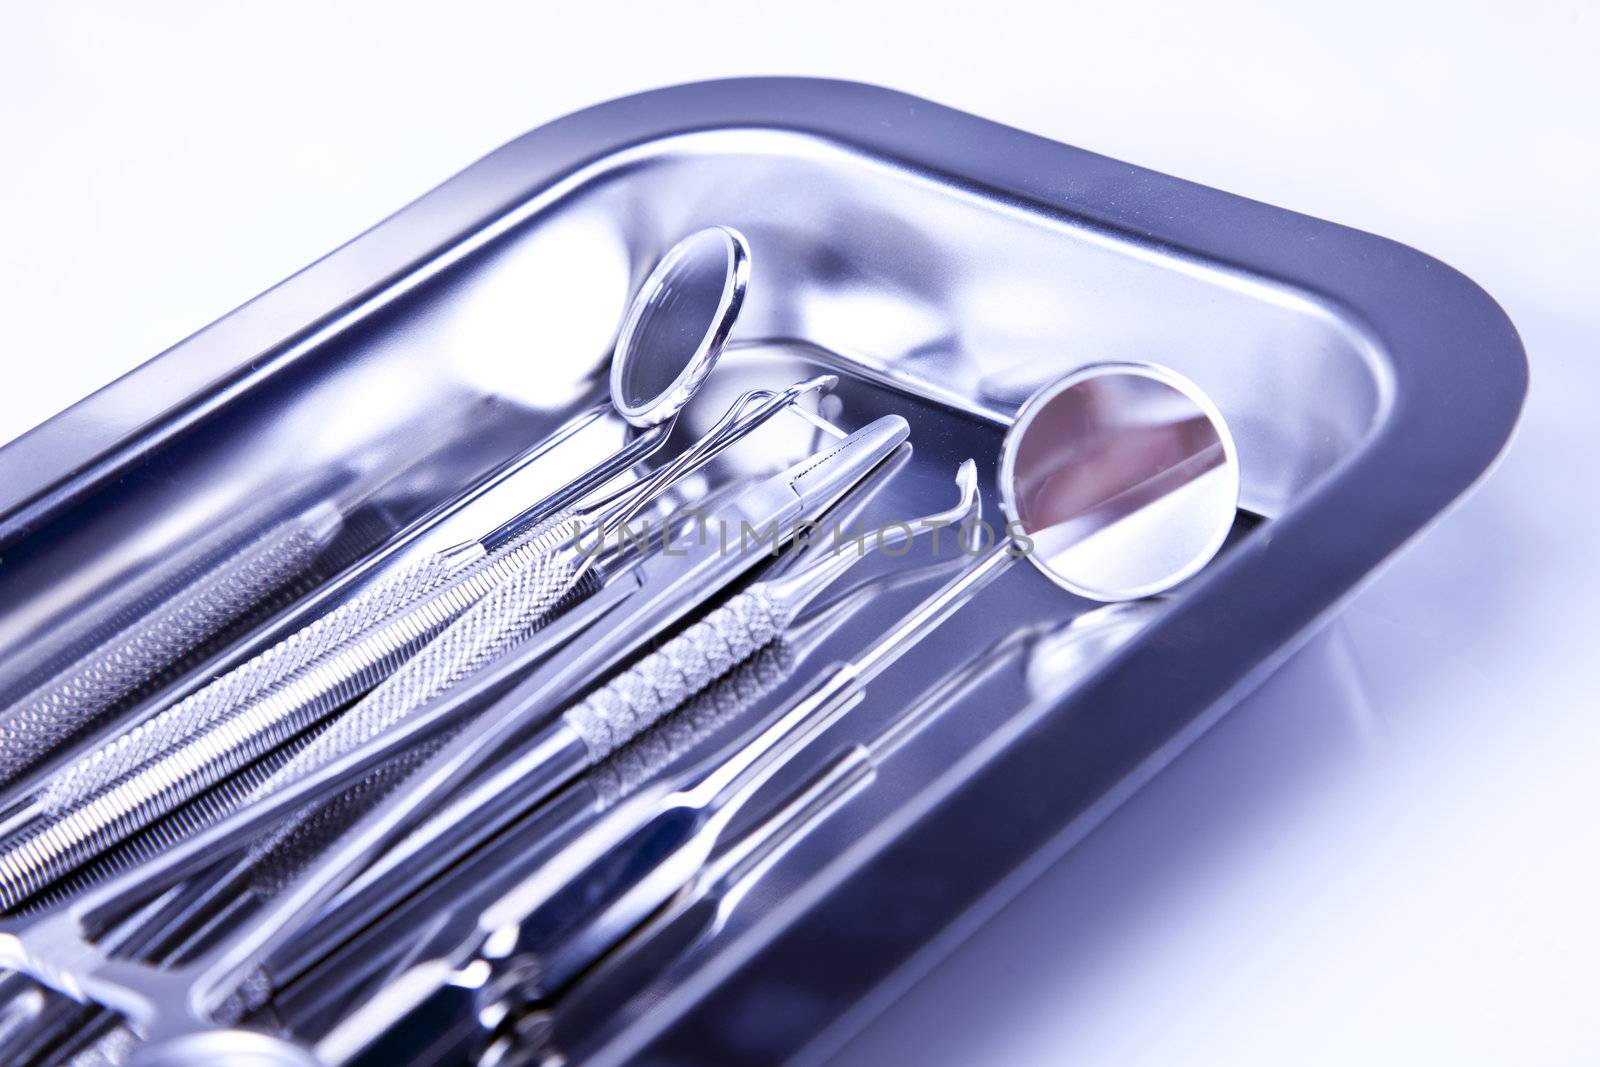 Dental equipment, teeth care by fikmik